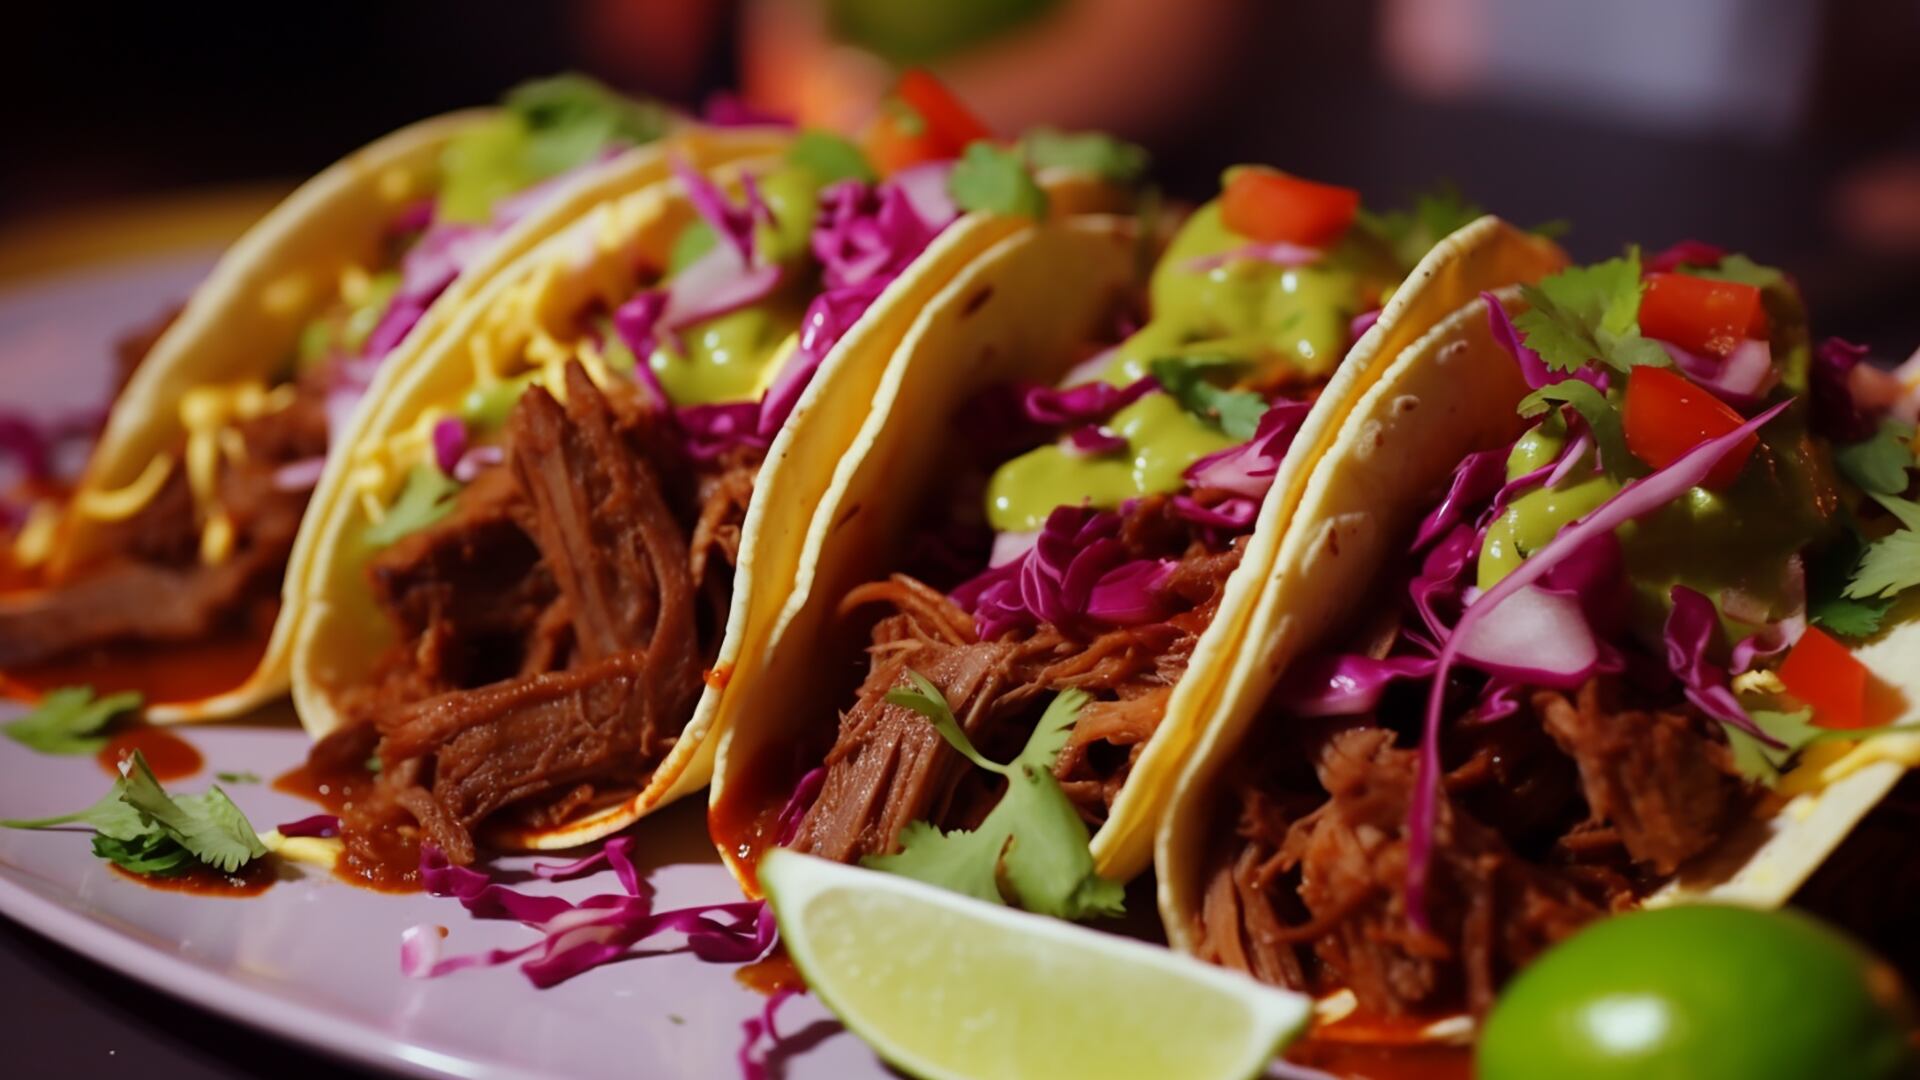 Comida mexicana gastronomía tacos de carne  - visualesIA